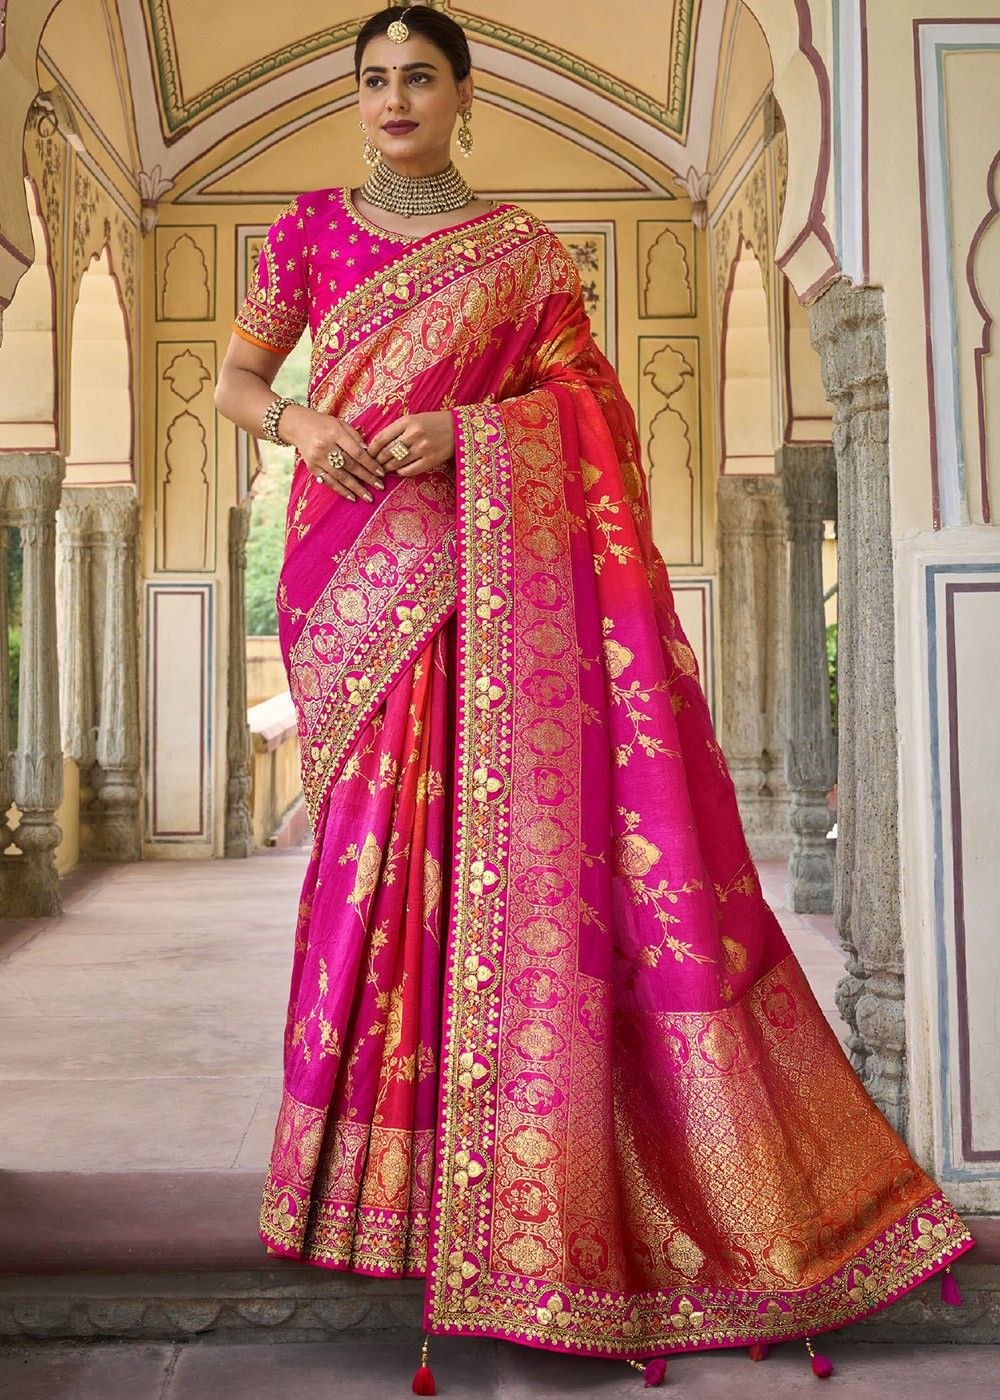 Top 84+ pink saree wedding best